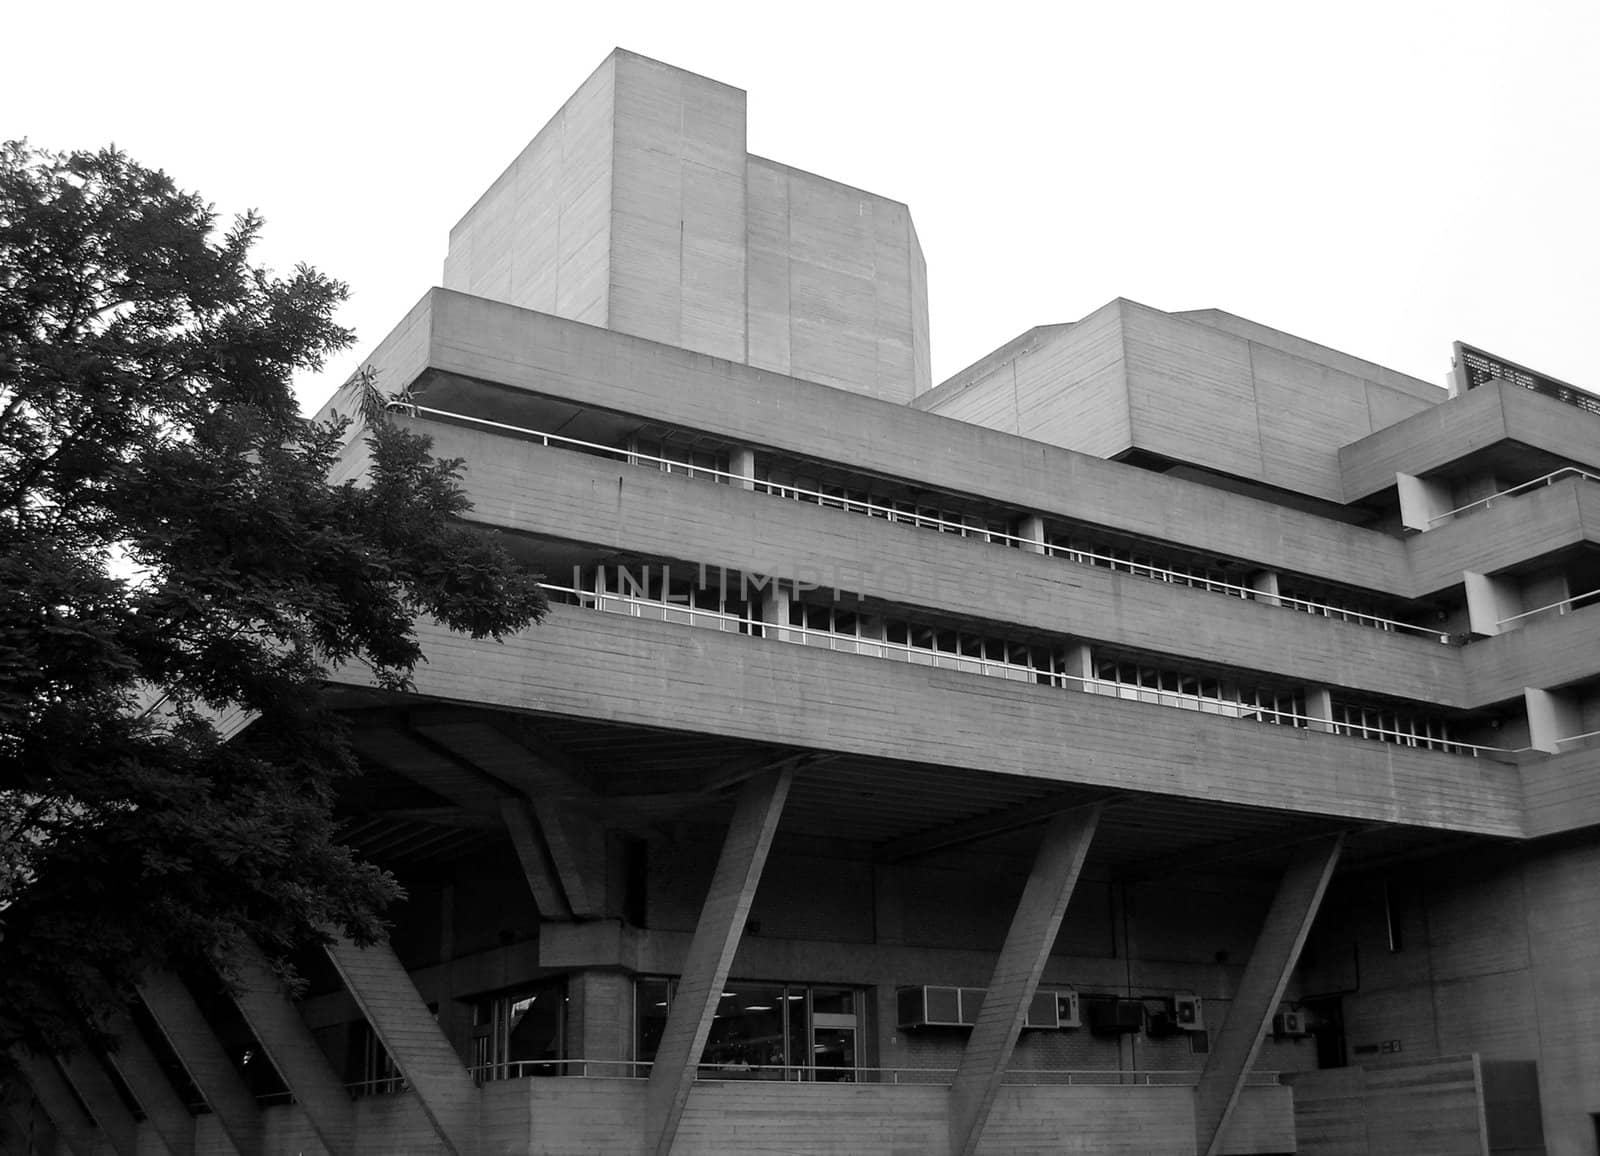 National Theatre, modern brutalist architecture in London